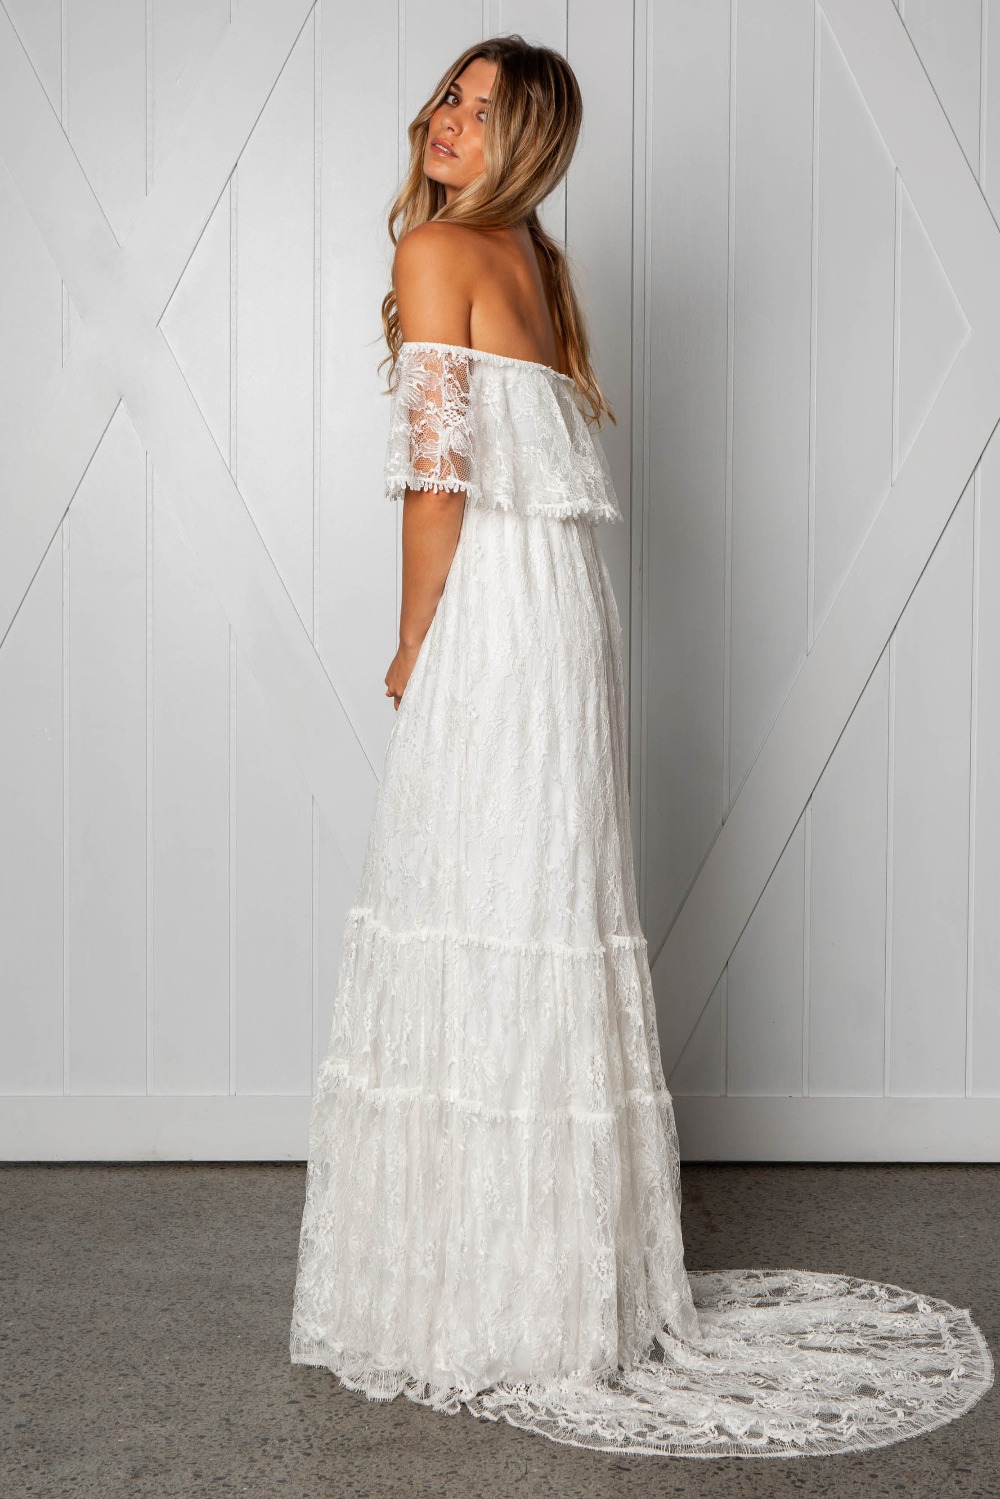 franca-wedding-dress-by-grace-loves-lace-1600-x-10